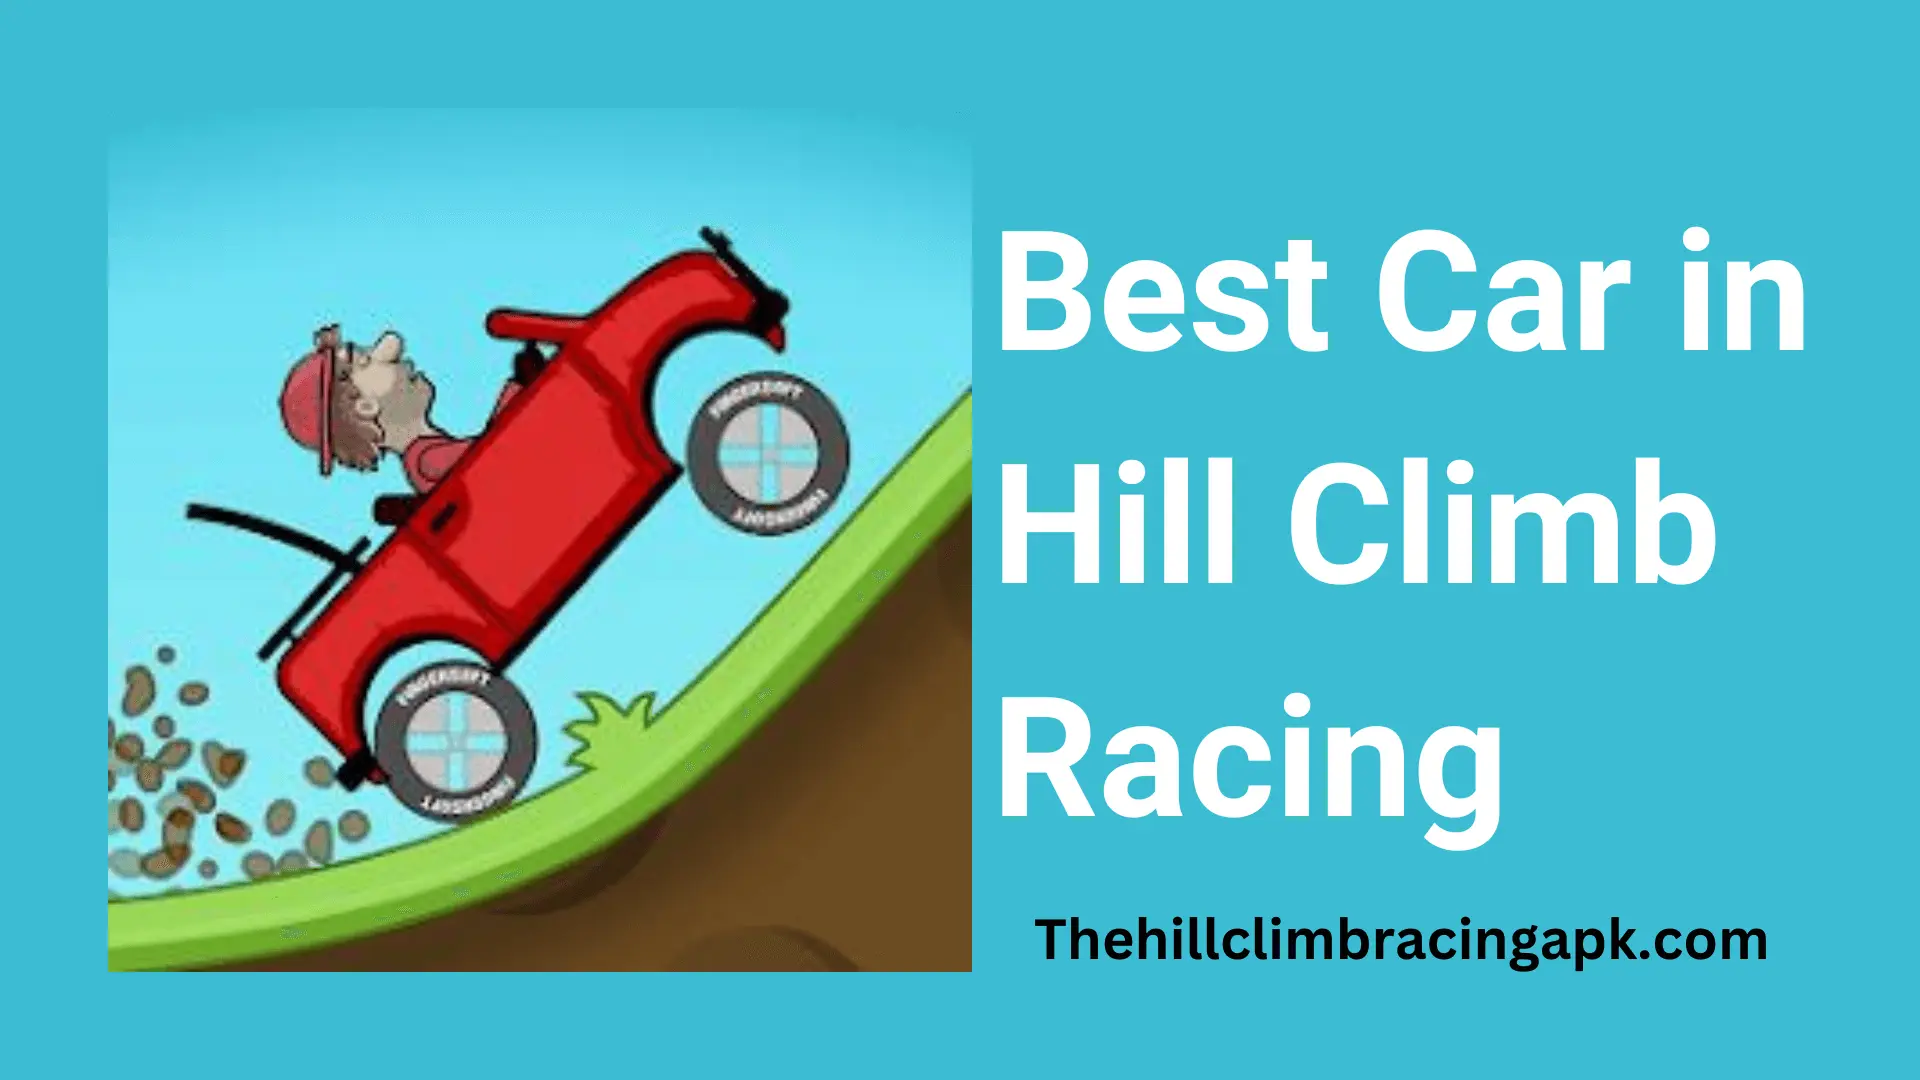 Hill Climb Racing 2 - TOP 3 VEHICLES